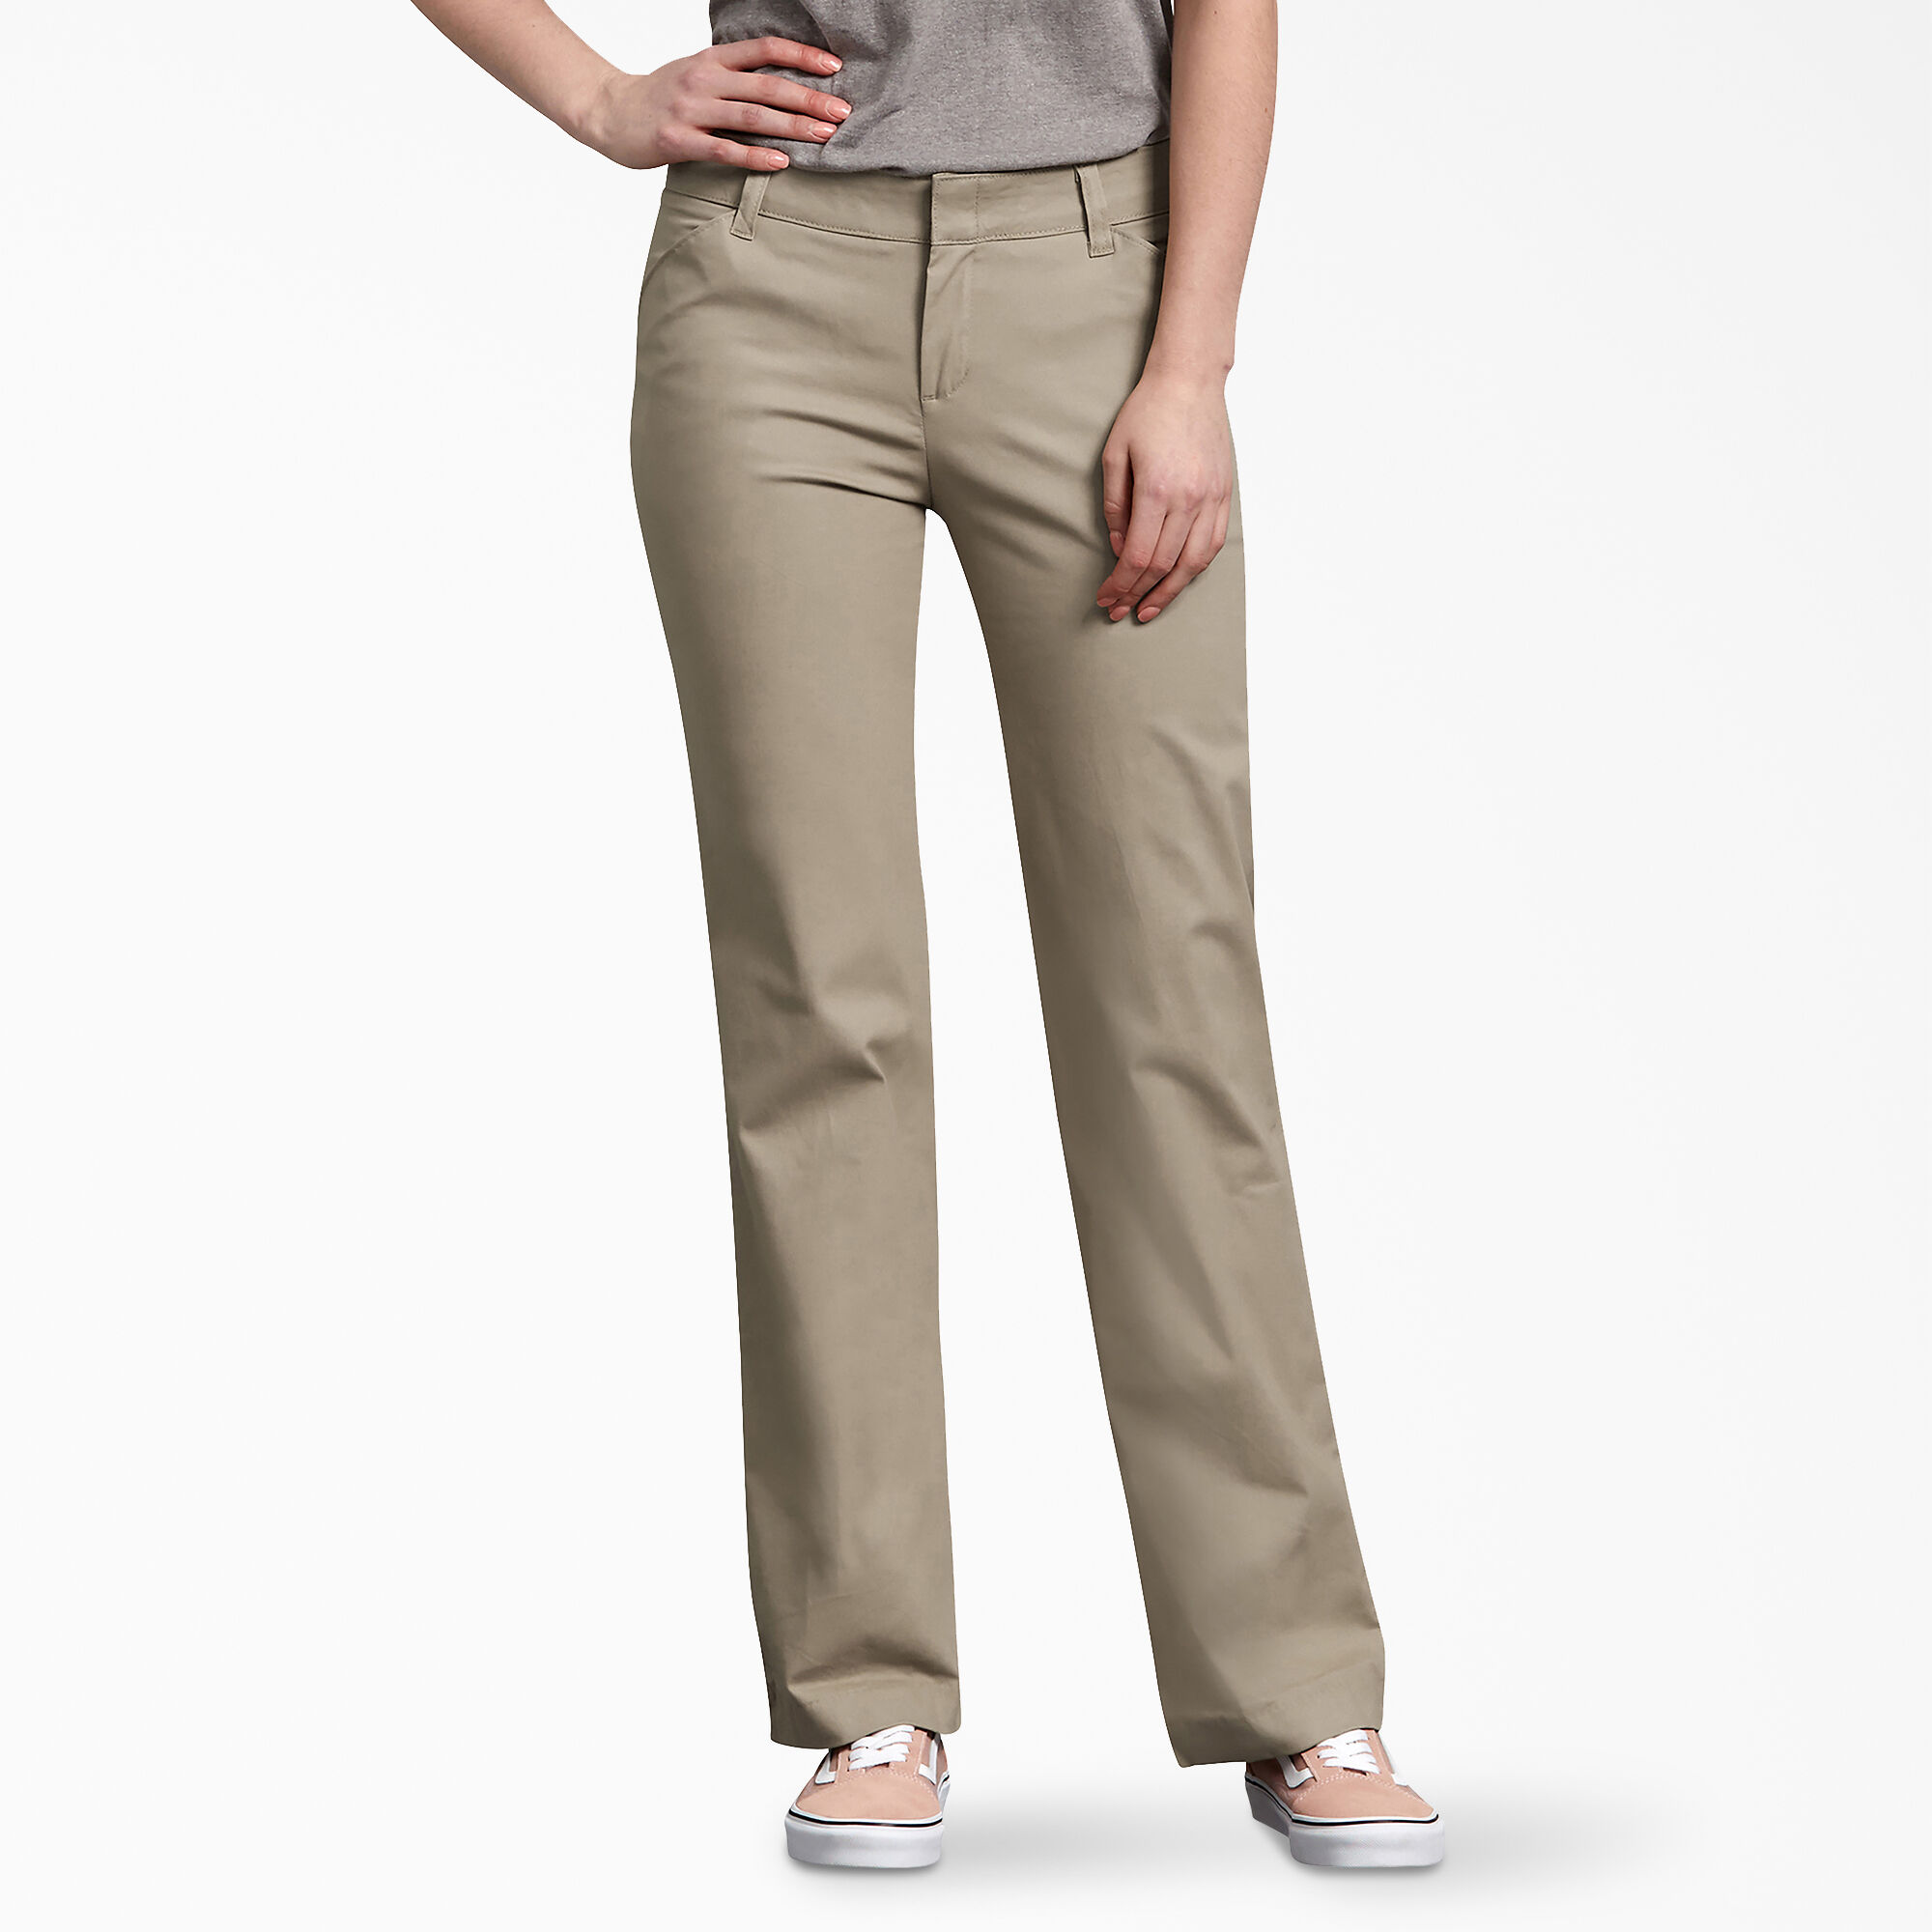 Women's Work Pants - Khaki Pants & Pants for Women | Dickies